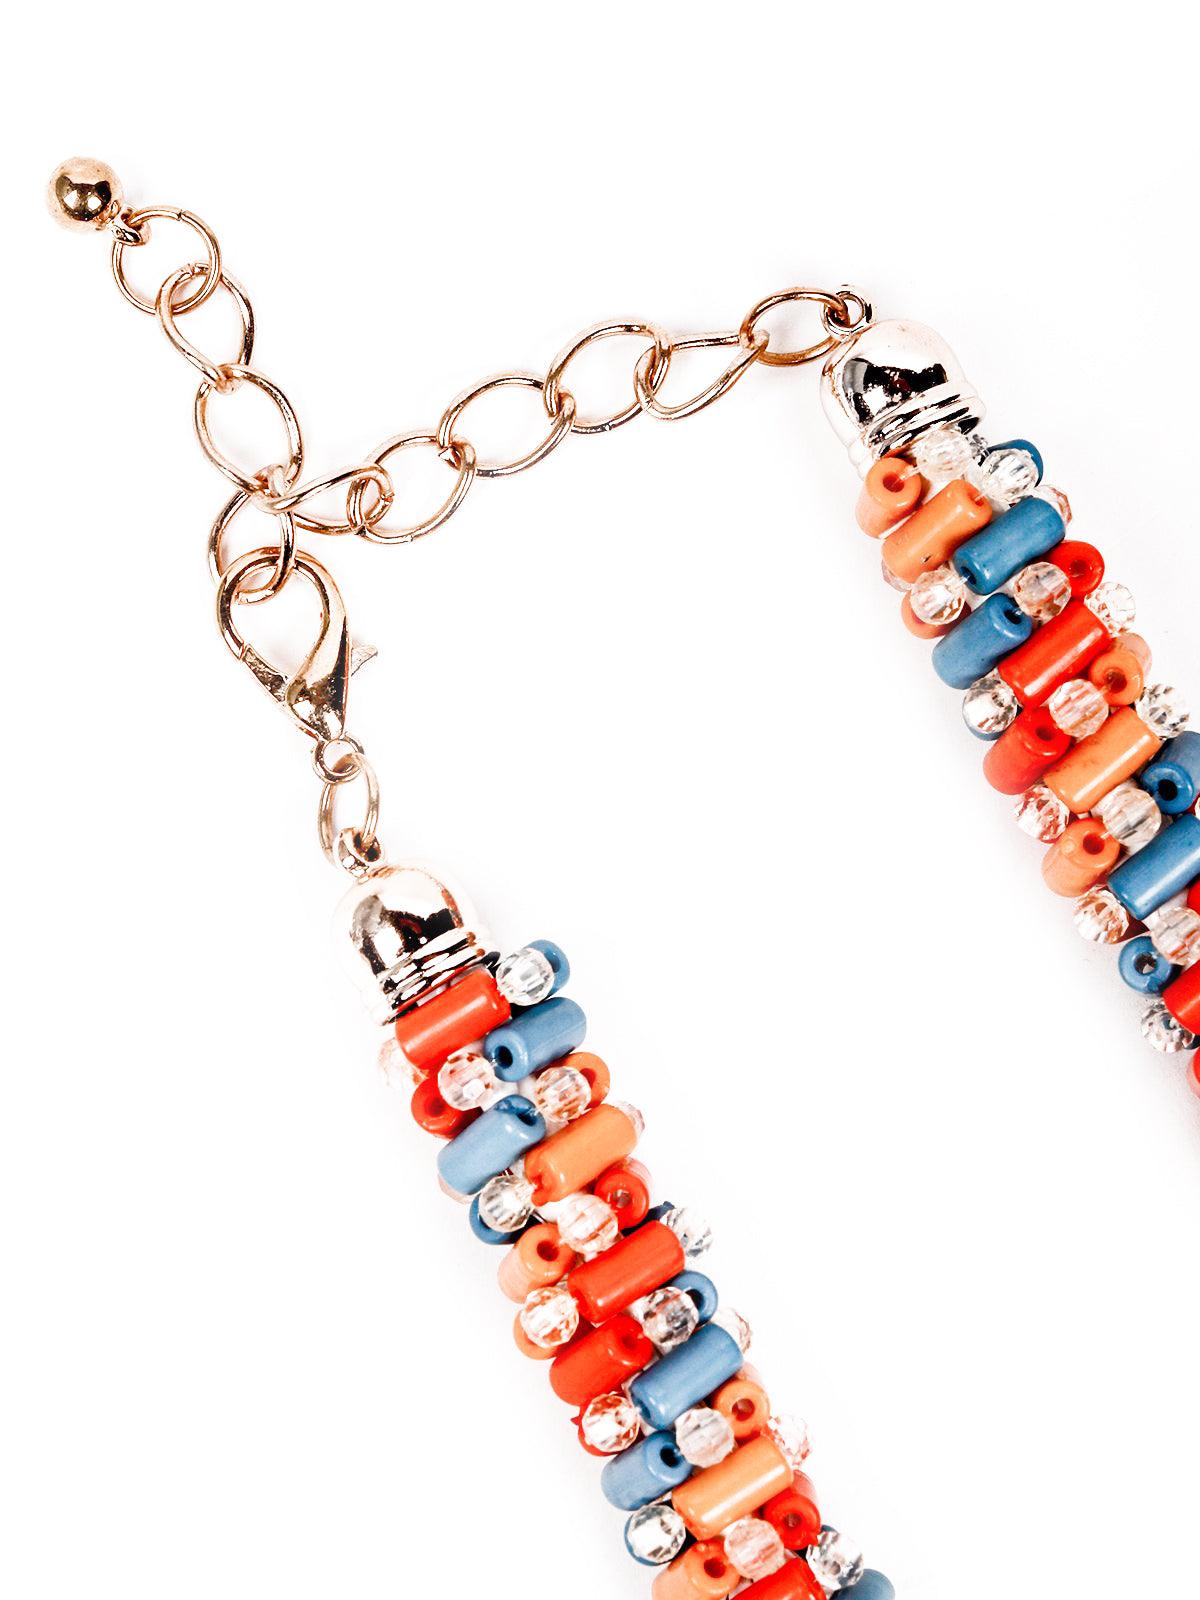 Orange And Blue Beaded Necklace - Odette